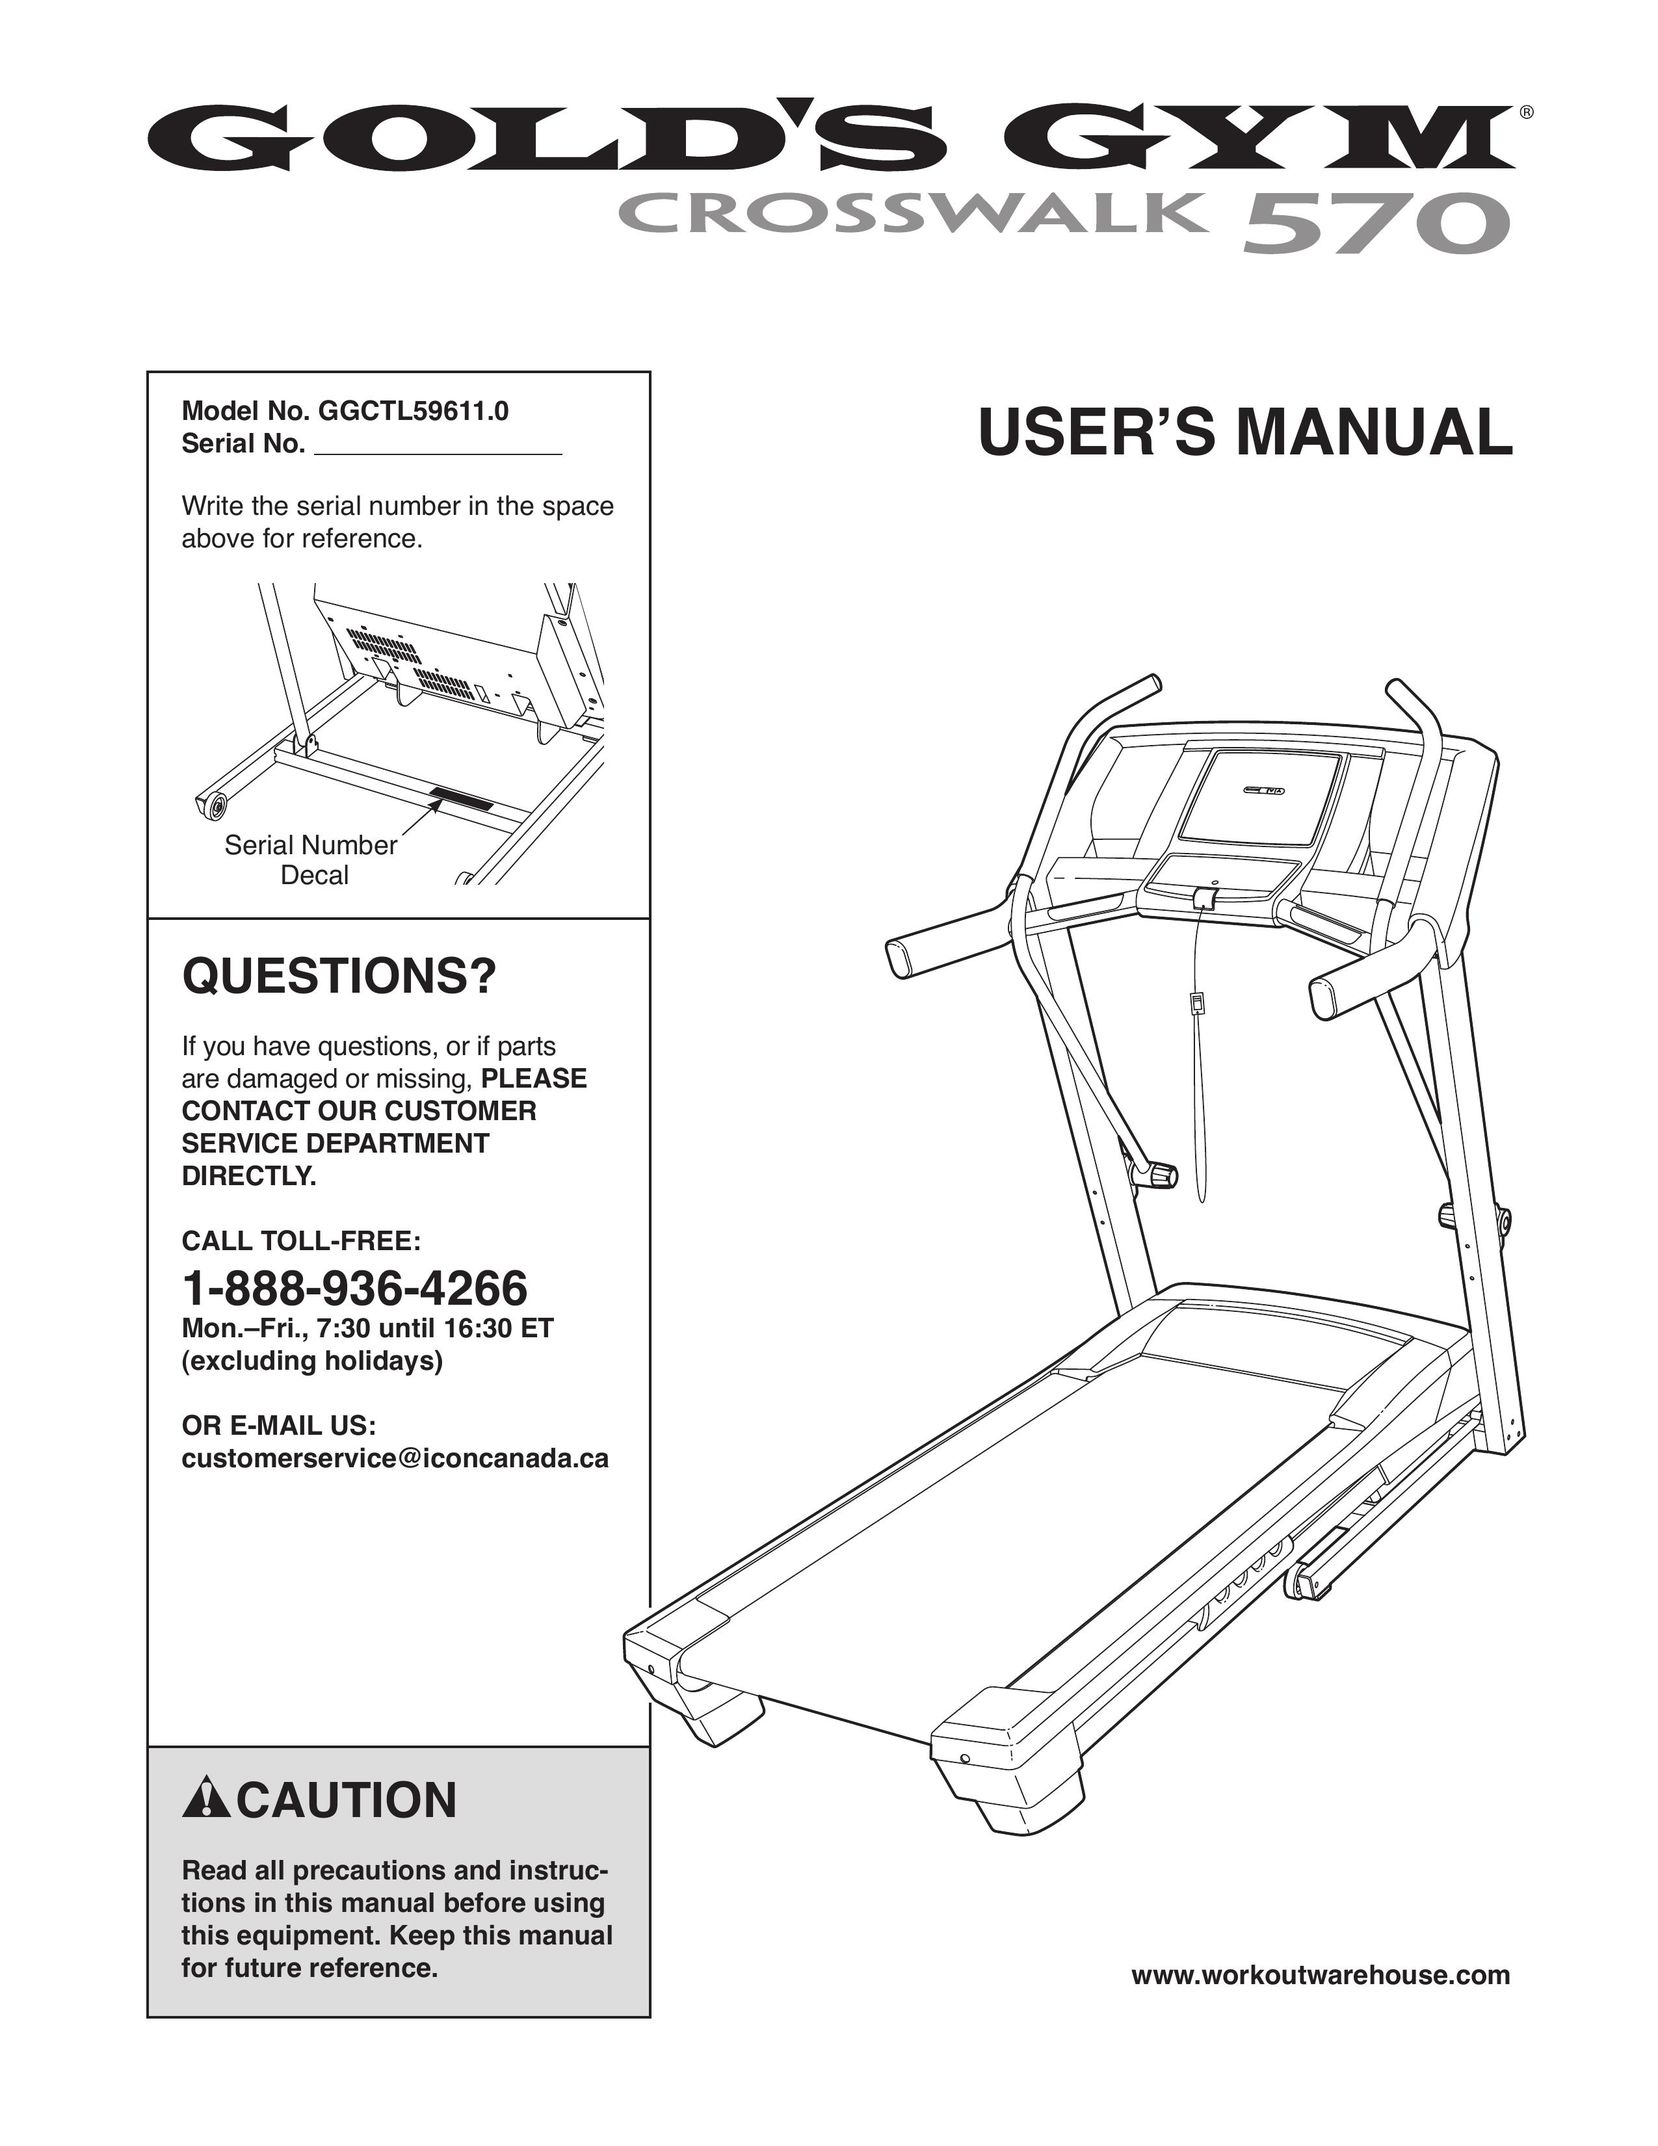 Gold's Gym GGCTL59611.0 Treadmill User Manual